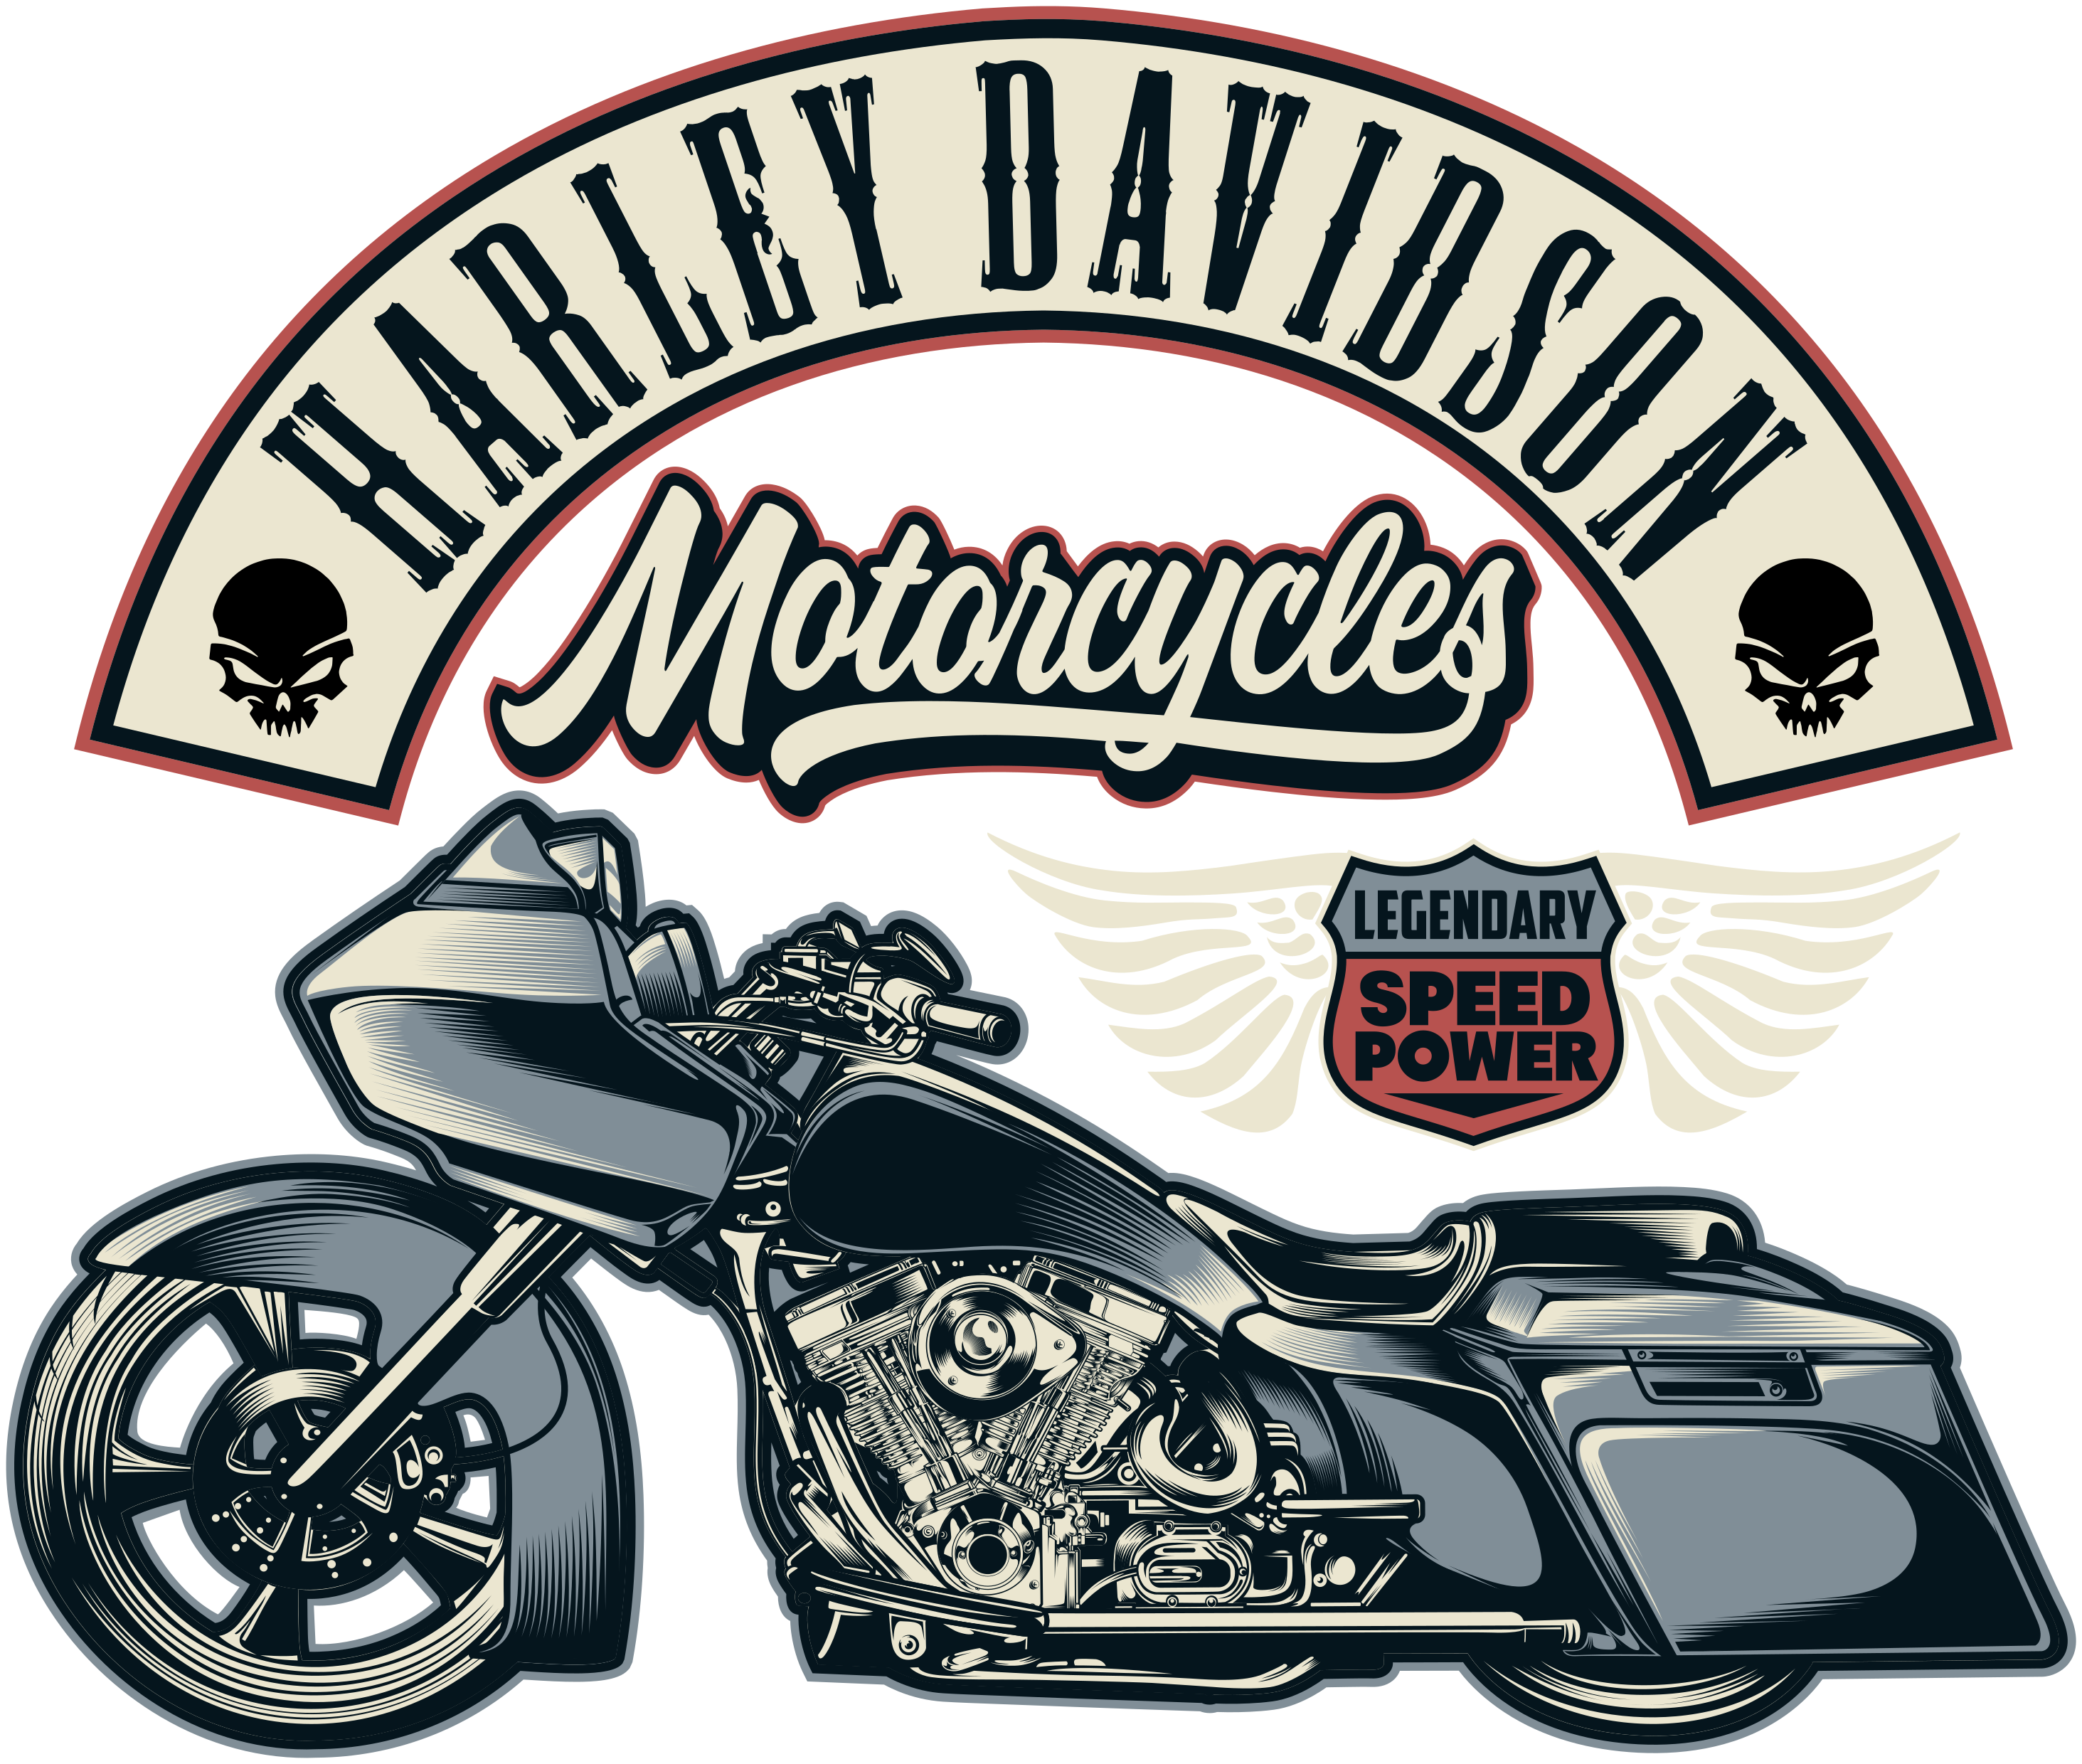 Harley Davidson Sticker For Motorcycle Tenstickers